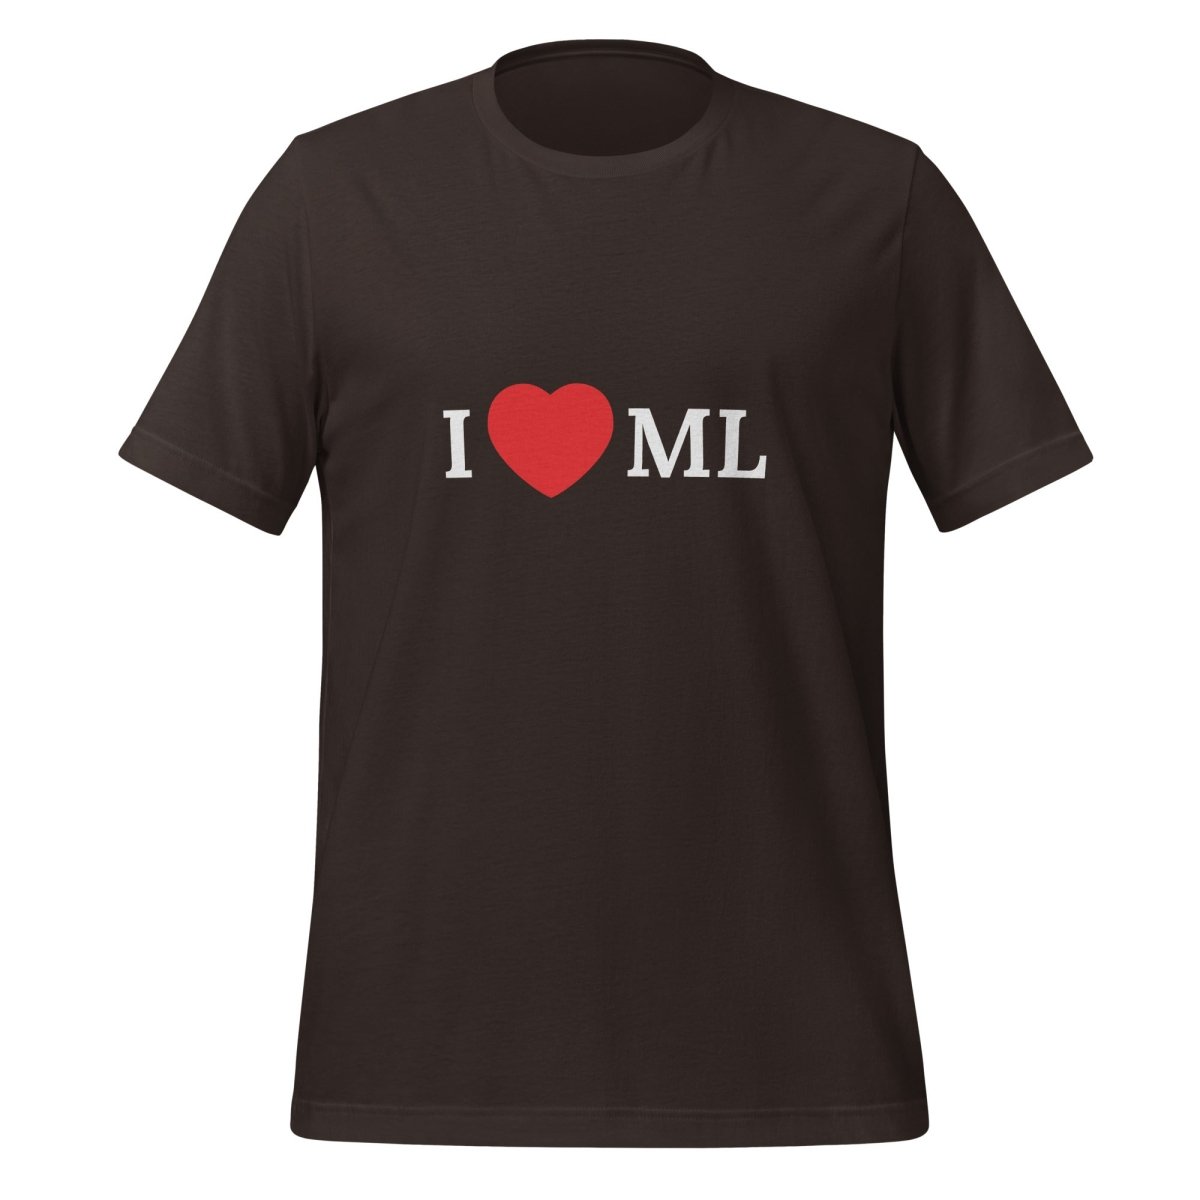 I Love ML (Machine Learning) T - Shirt (unisex) - Brown - AI Store